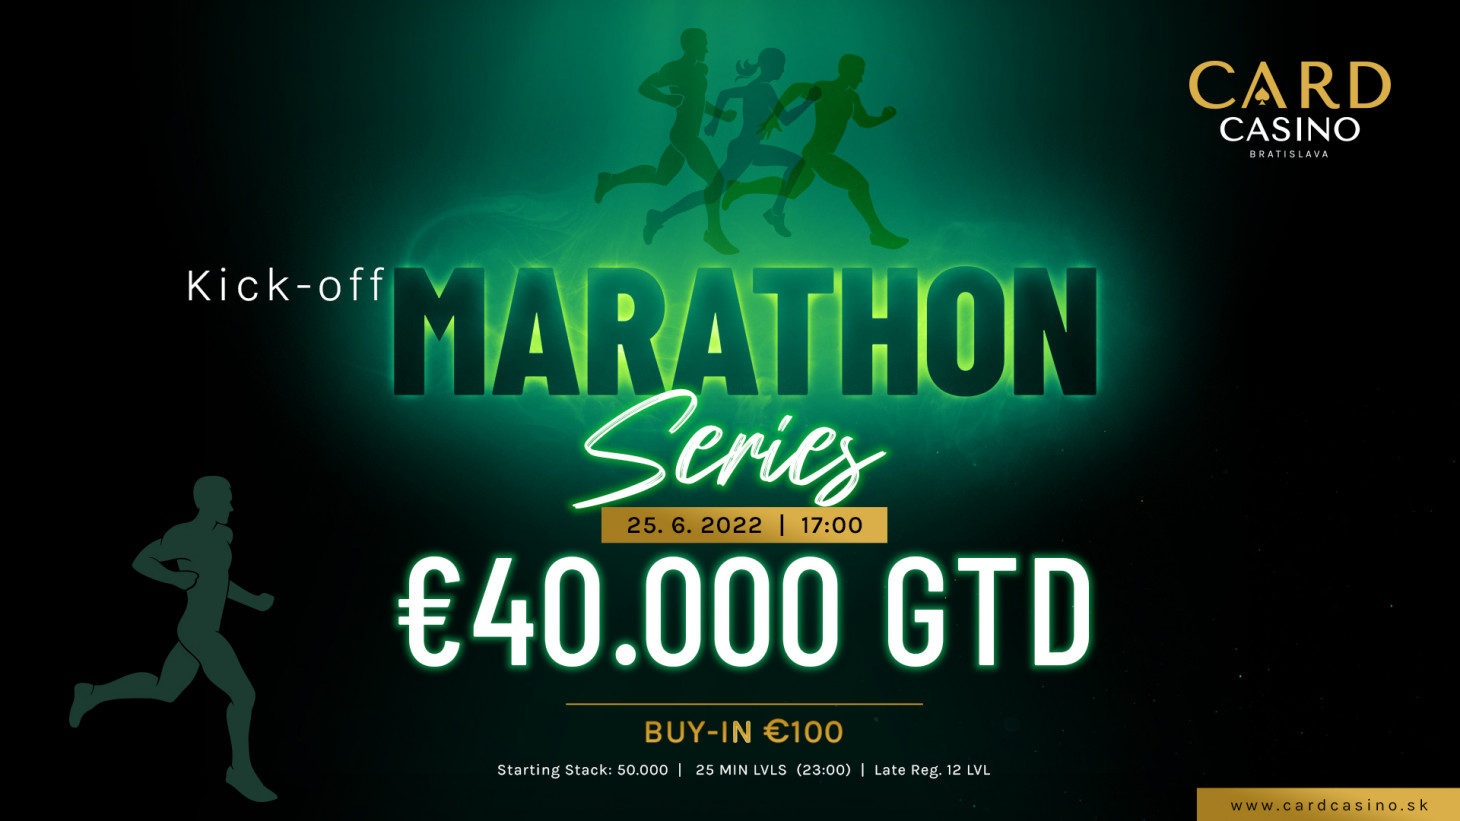 One-day marathon. A €40,000 GTD tournament awaits players on Saturday!